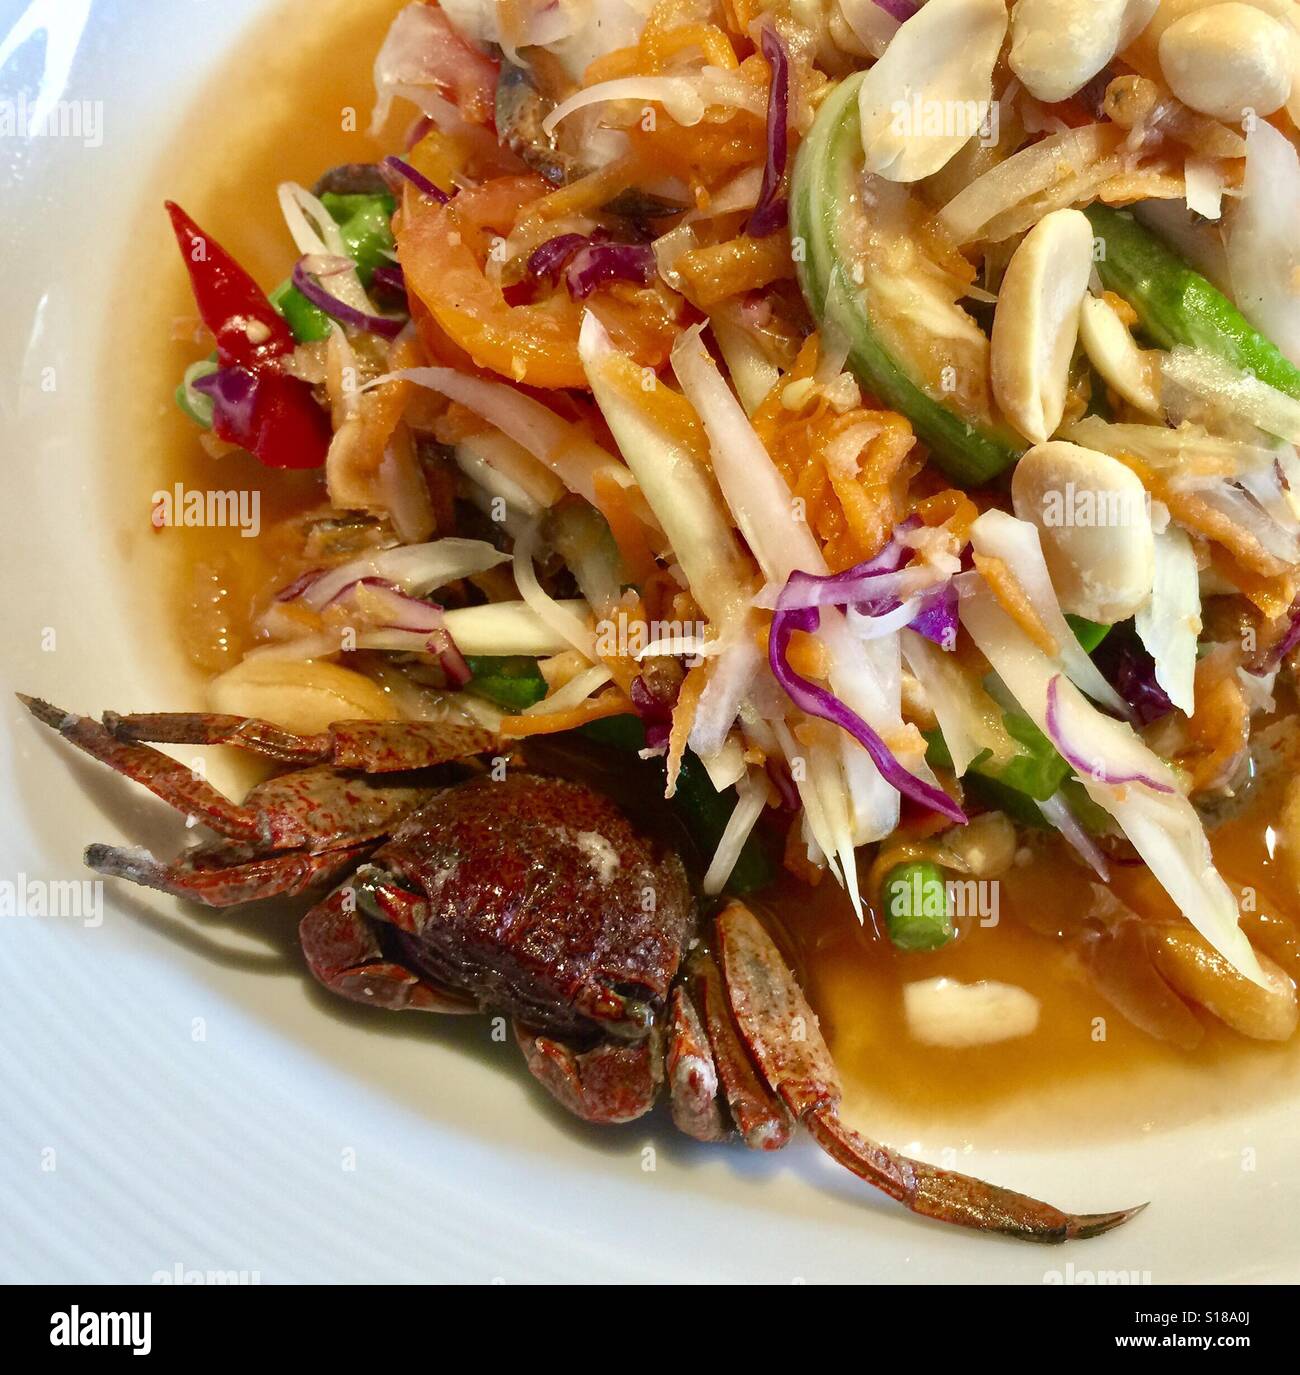 https://c8.alamy.com/comp/S18A0J/spicy-papaya-salad-som-tum-decorated-with-a-crab-chiang-rai-thailand-S18A0J.jpg